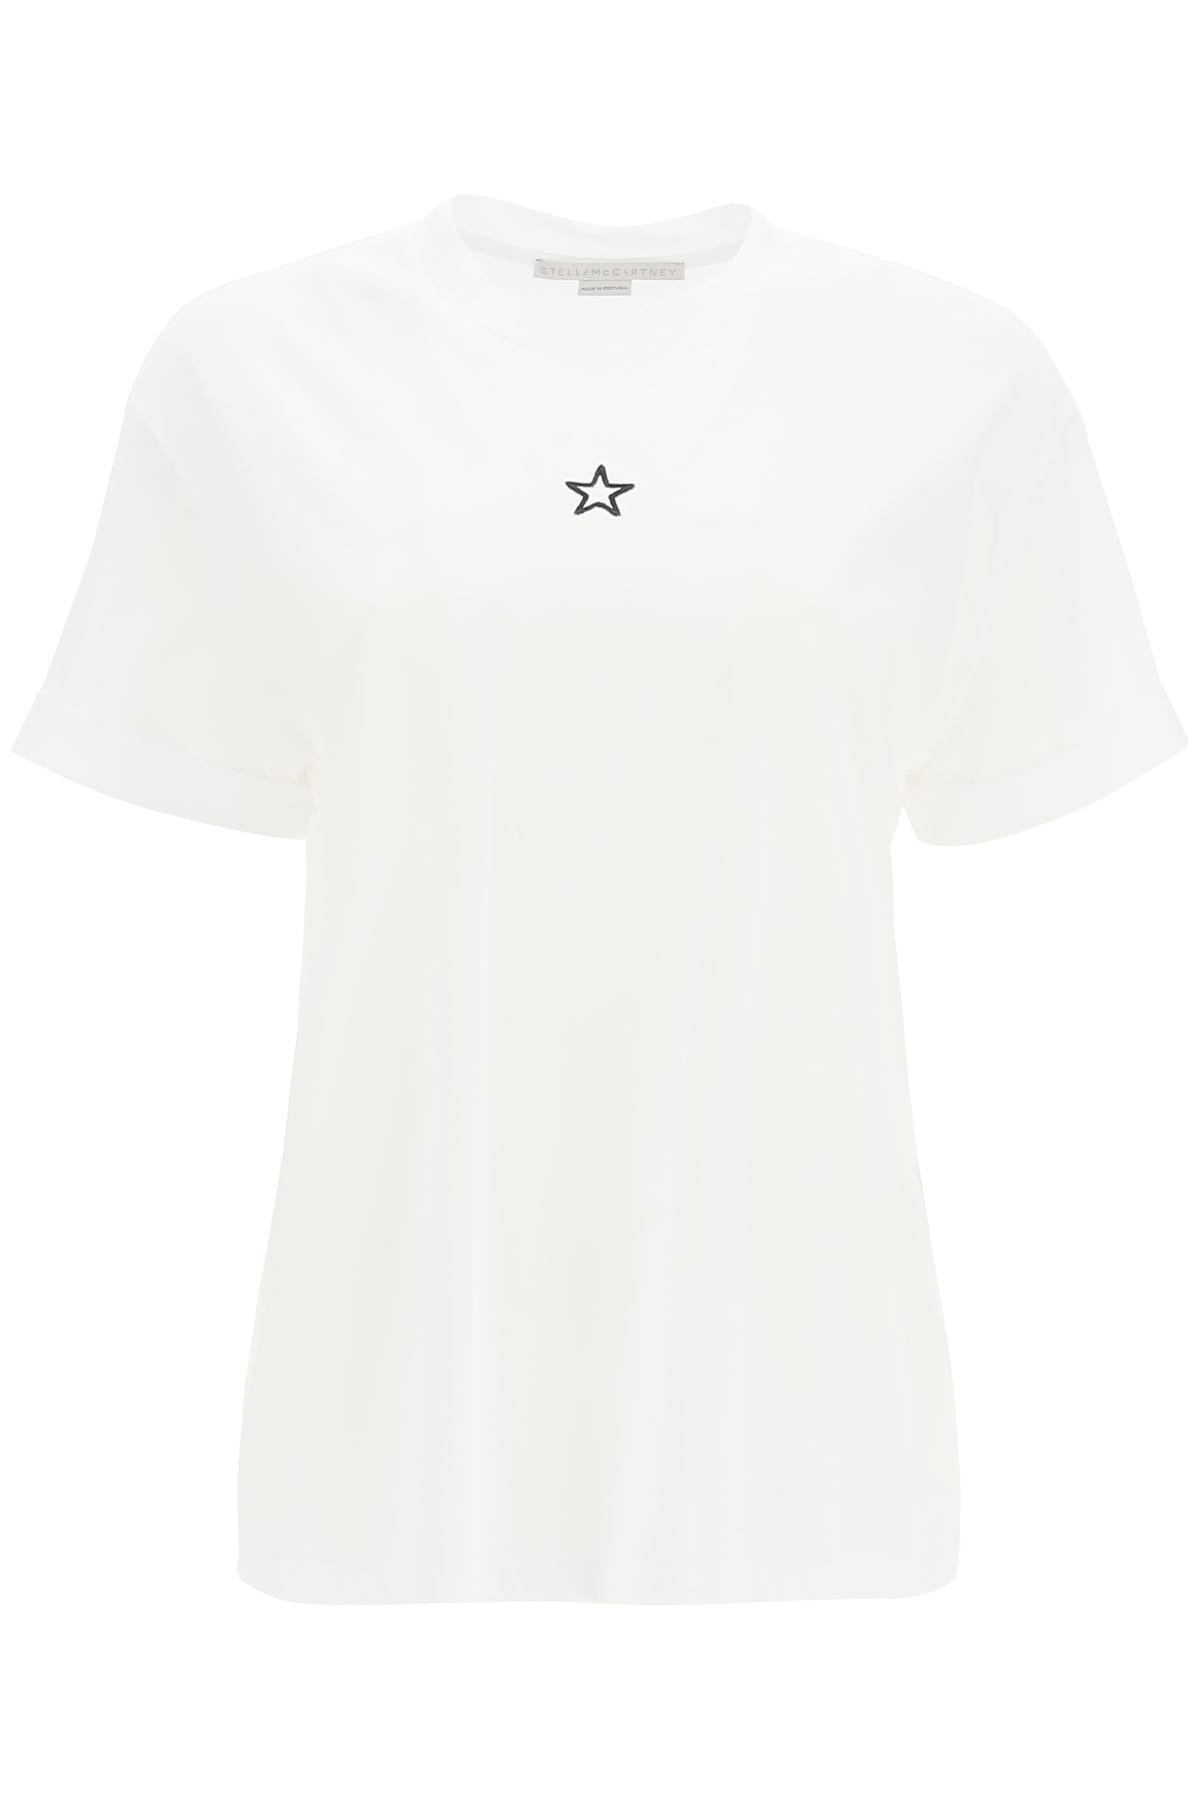 Stella McCartney Ministar Embroidered T-shirt